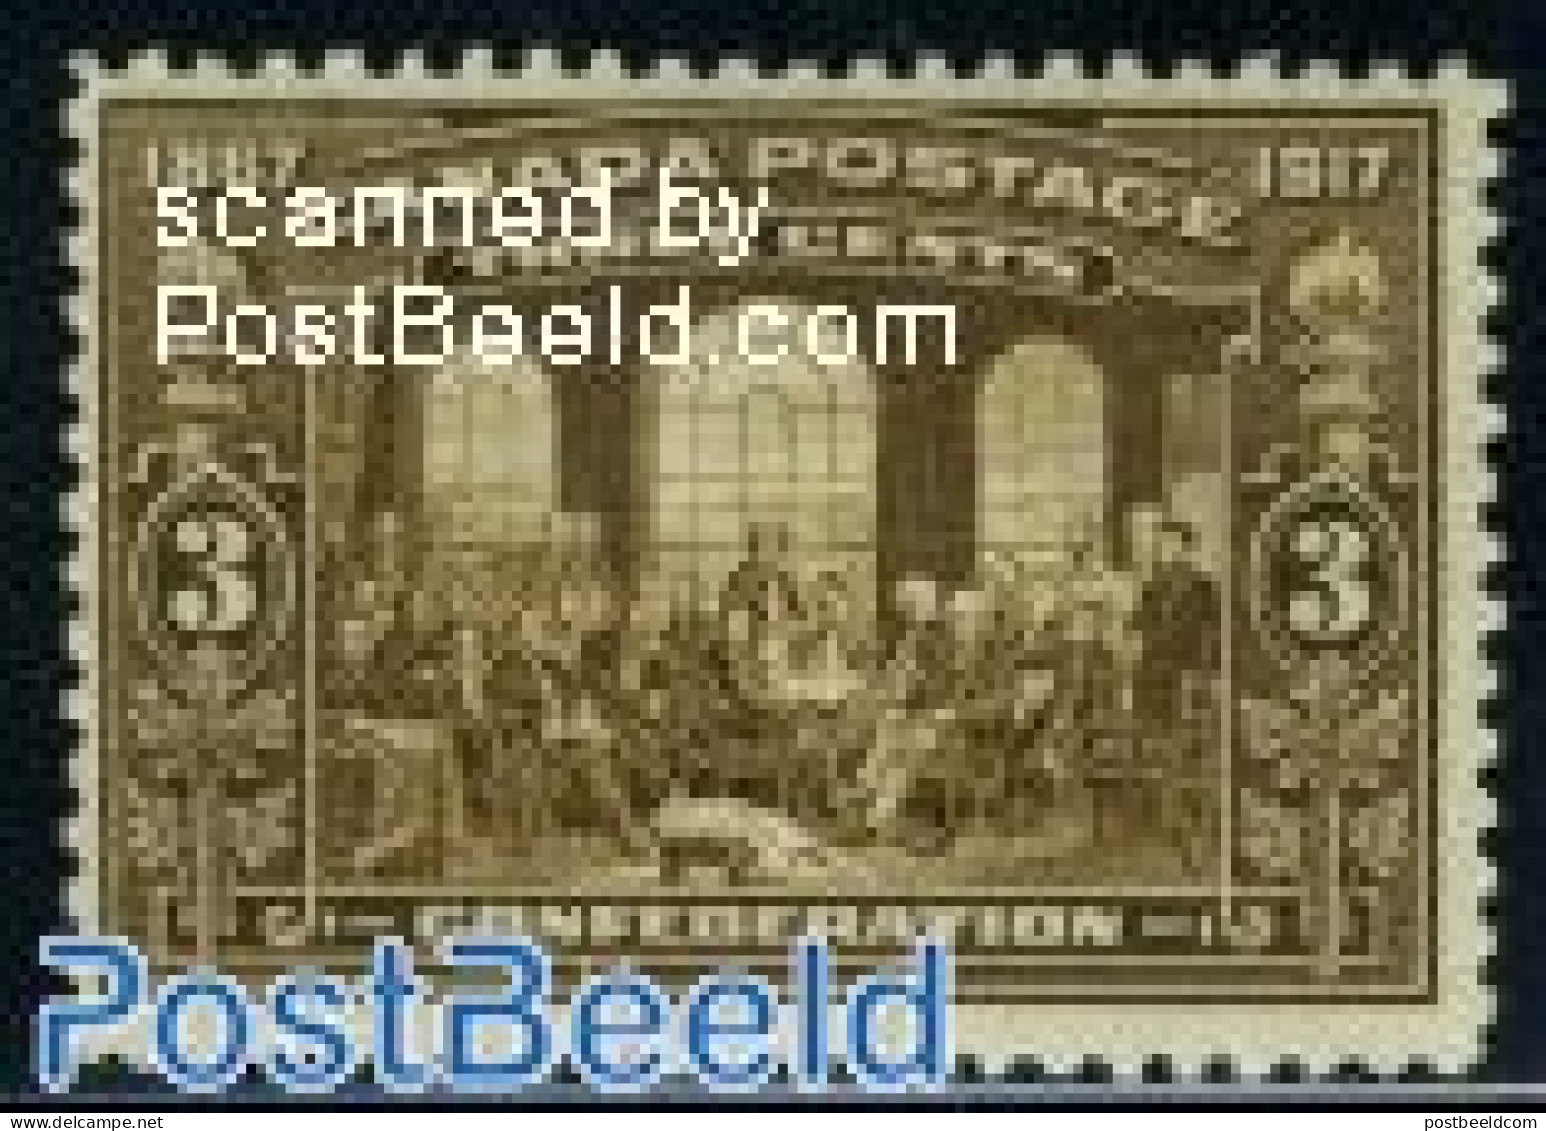 Canada 1917 Dominion Of Canada 1v, Mint NH - Nuovi